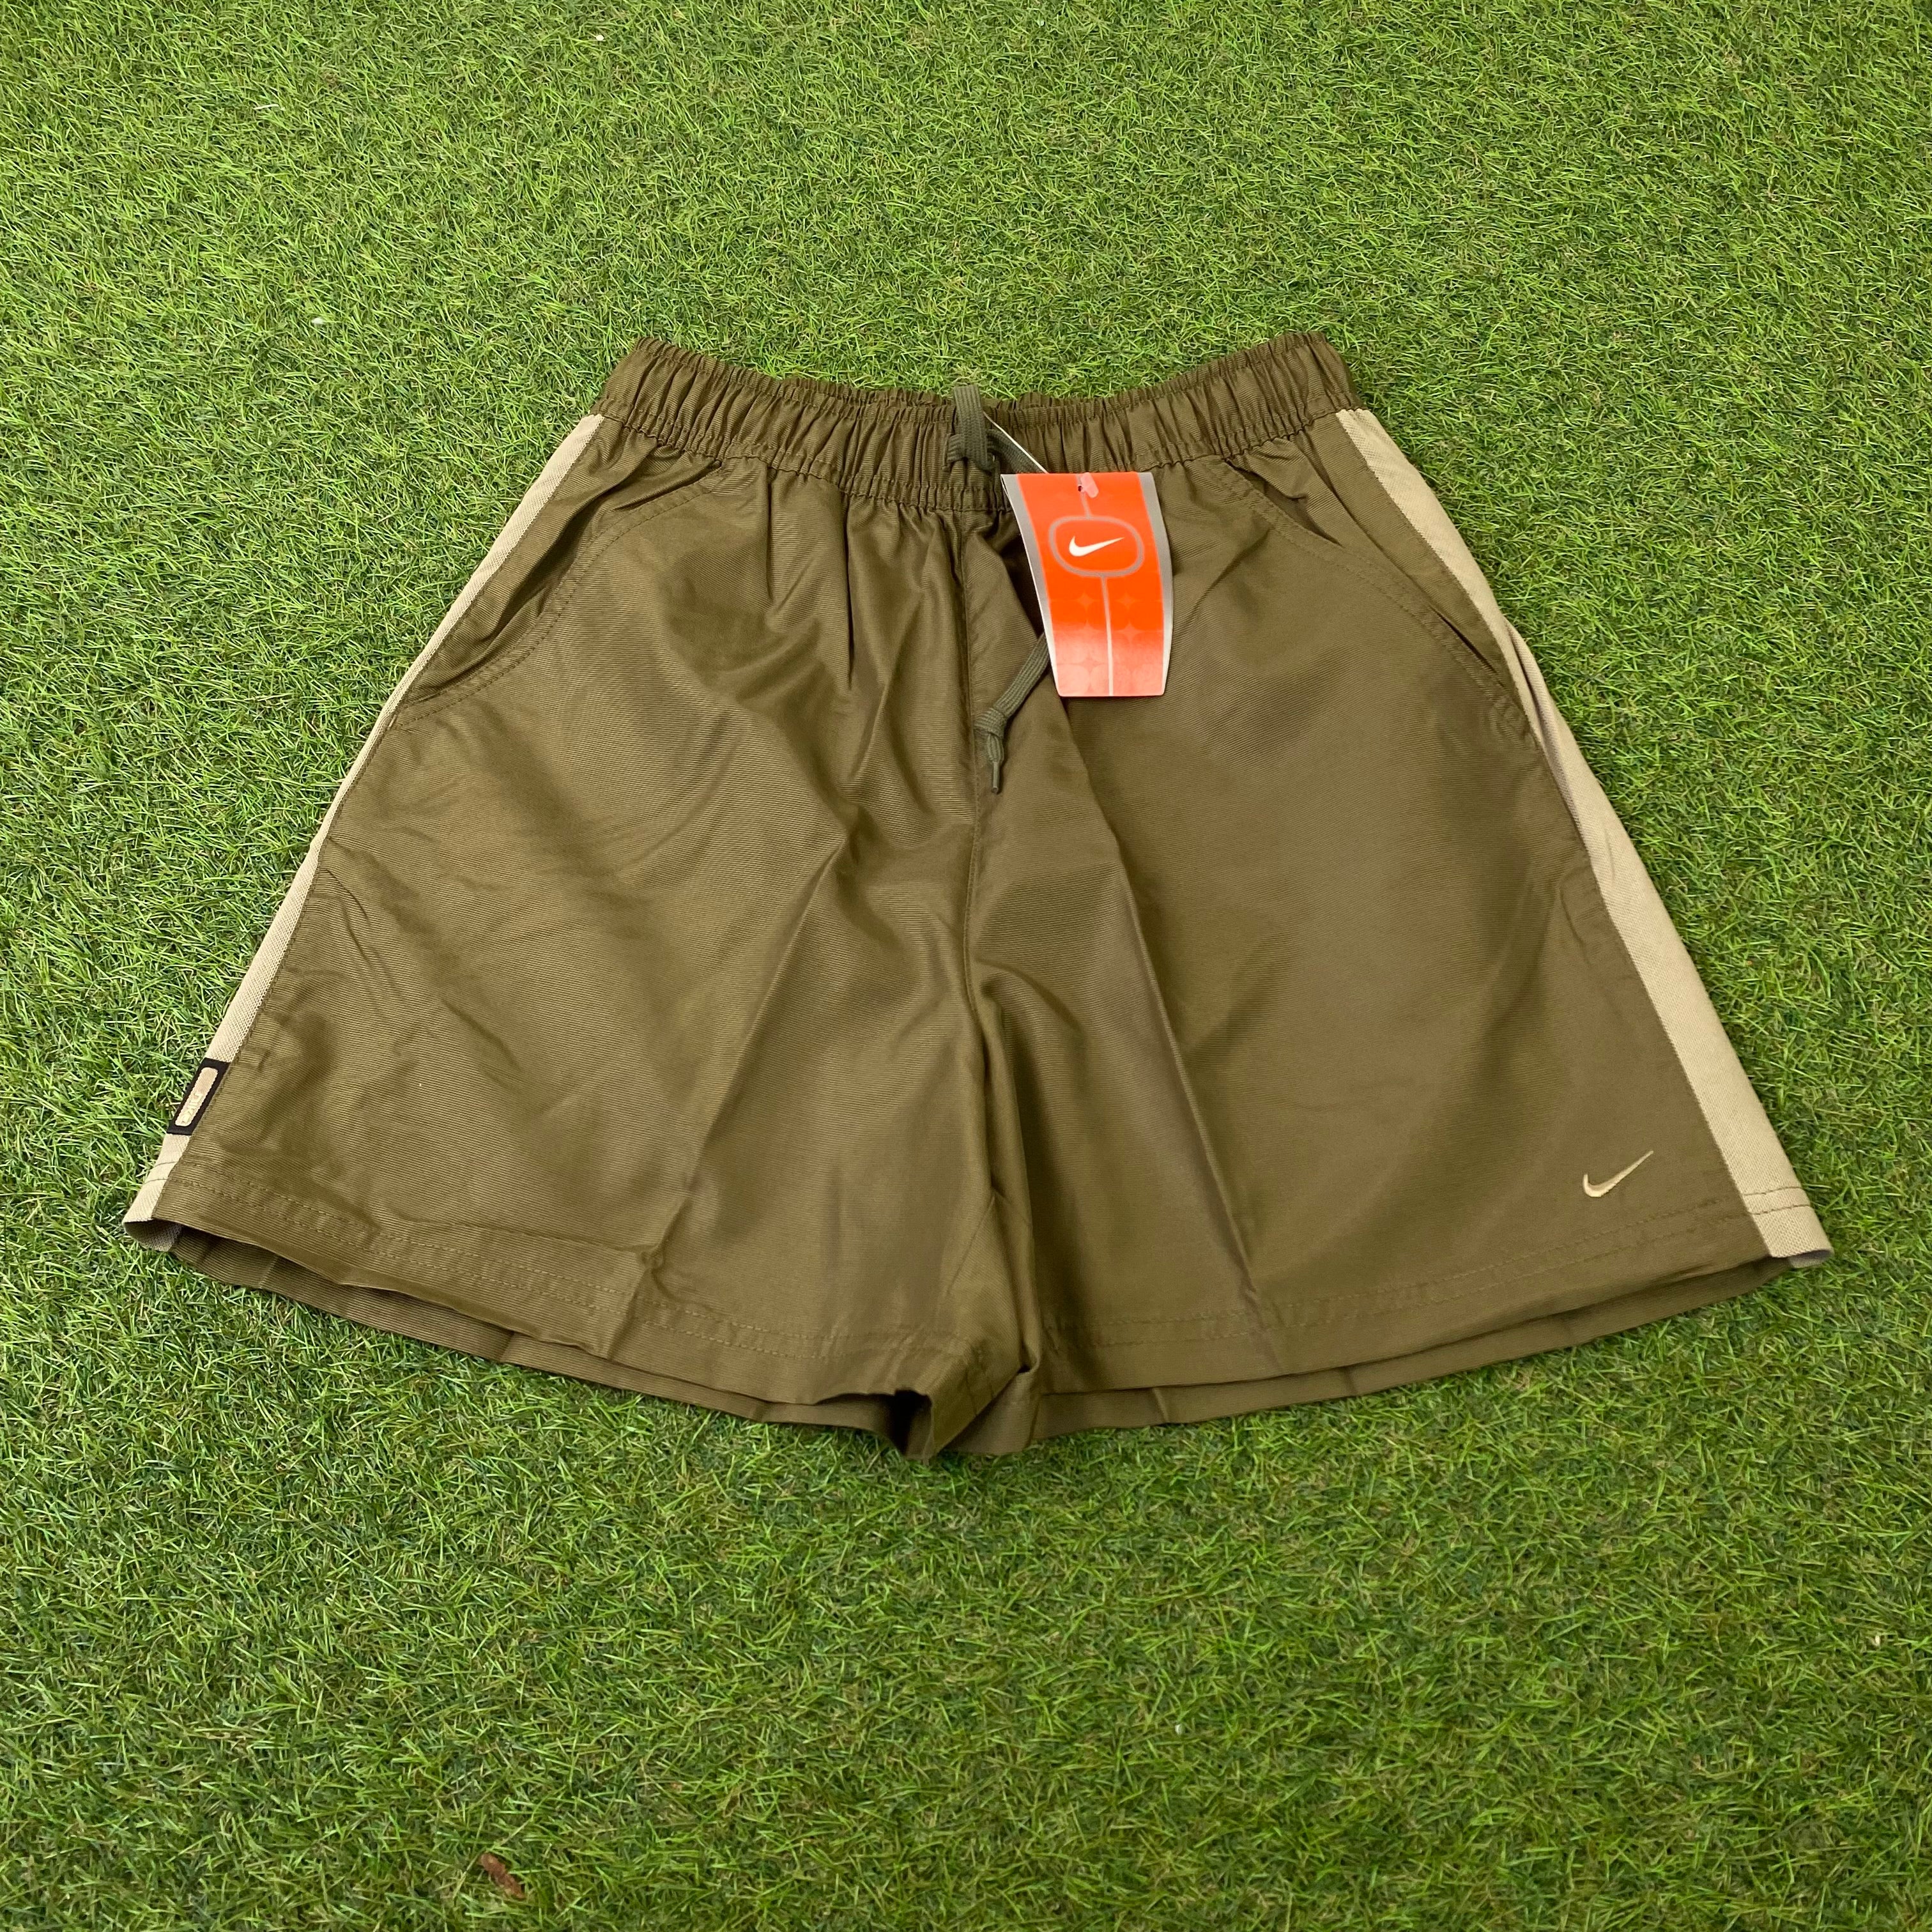 Vintage Nike Shorts Brown Green Small